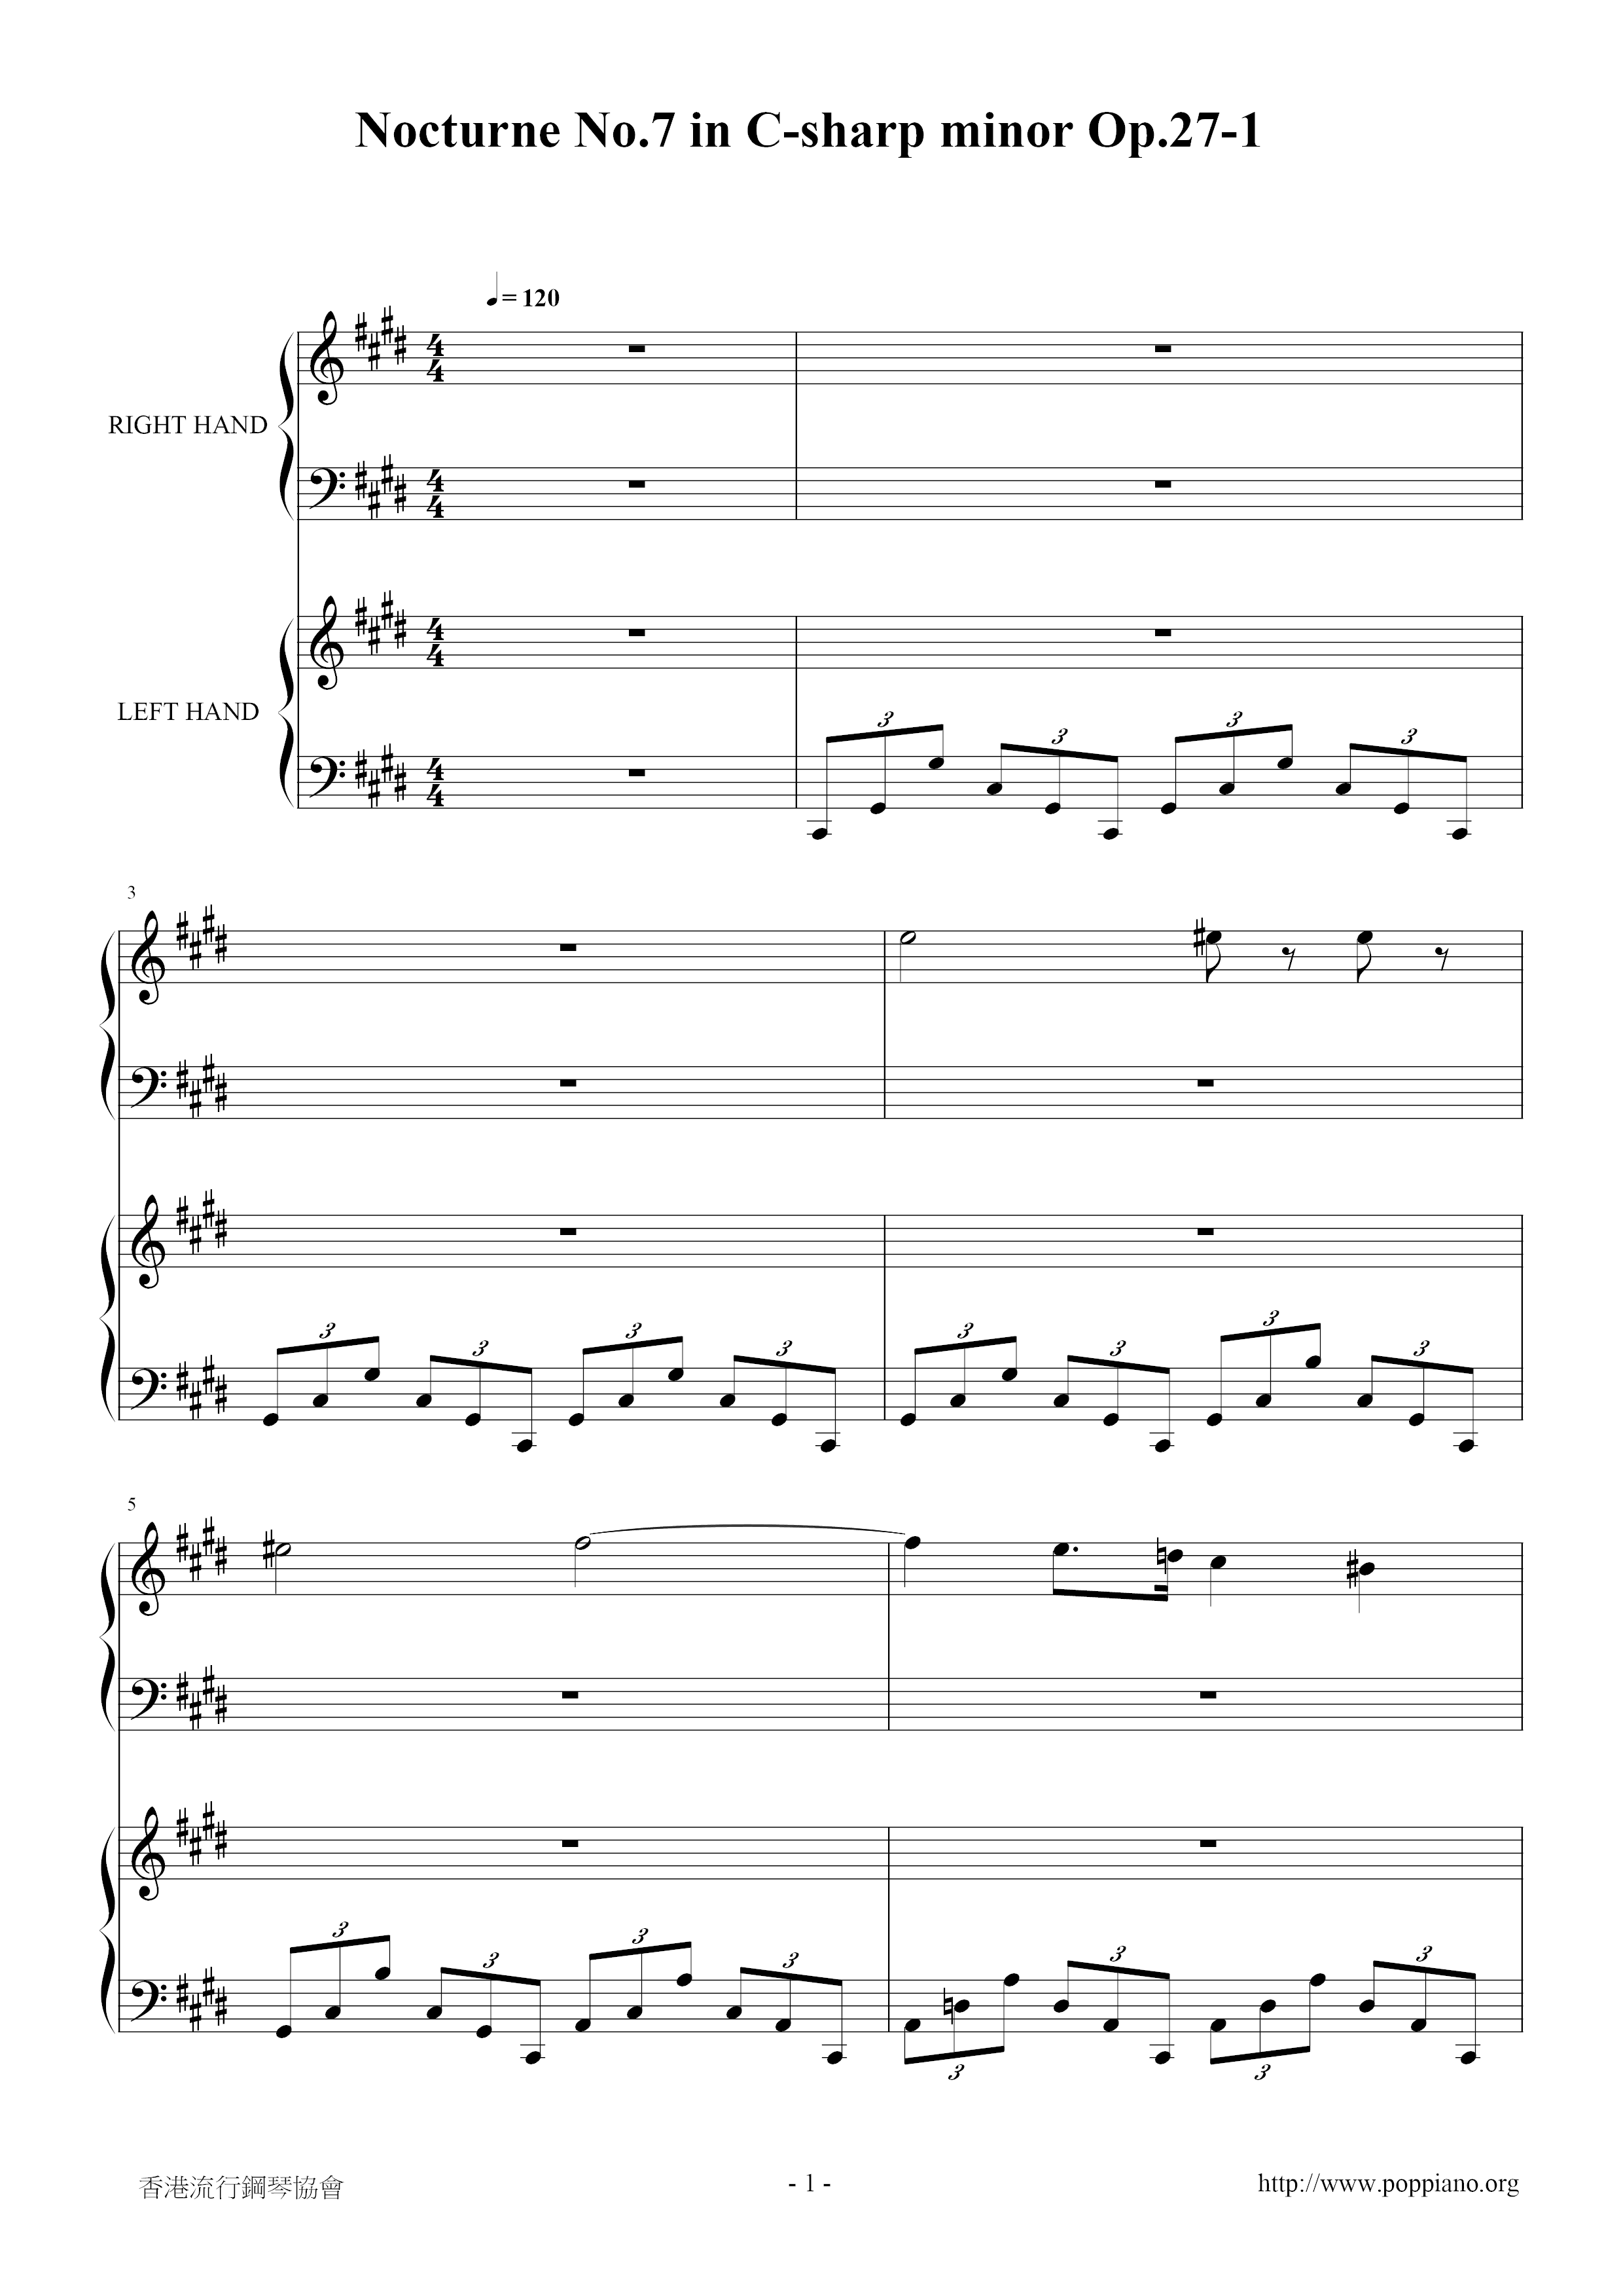 Nocturne No. 07, Op. 27-1 in C# Minor琴谱